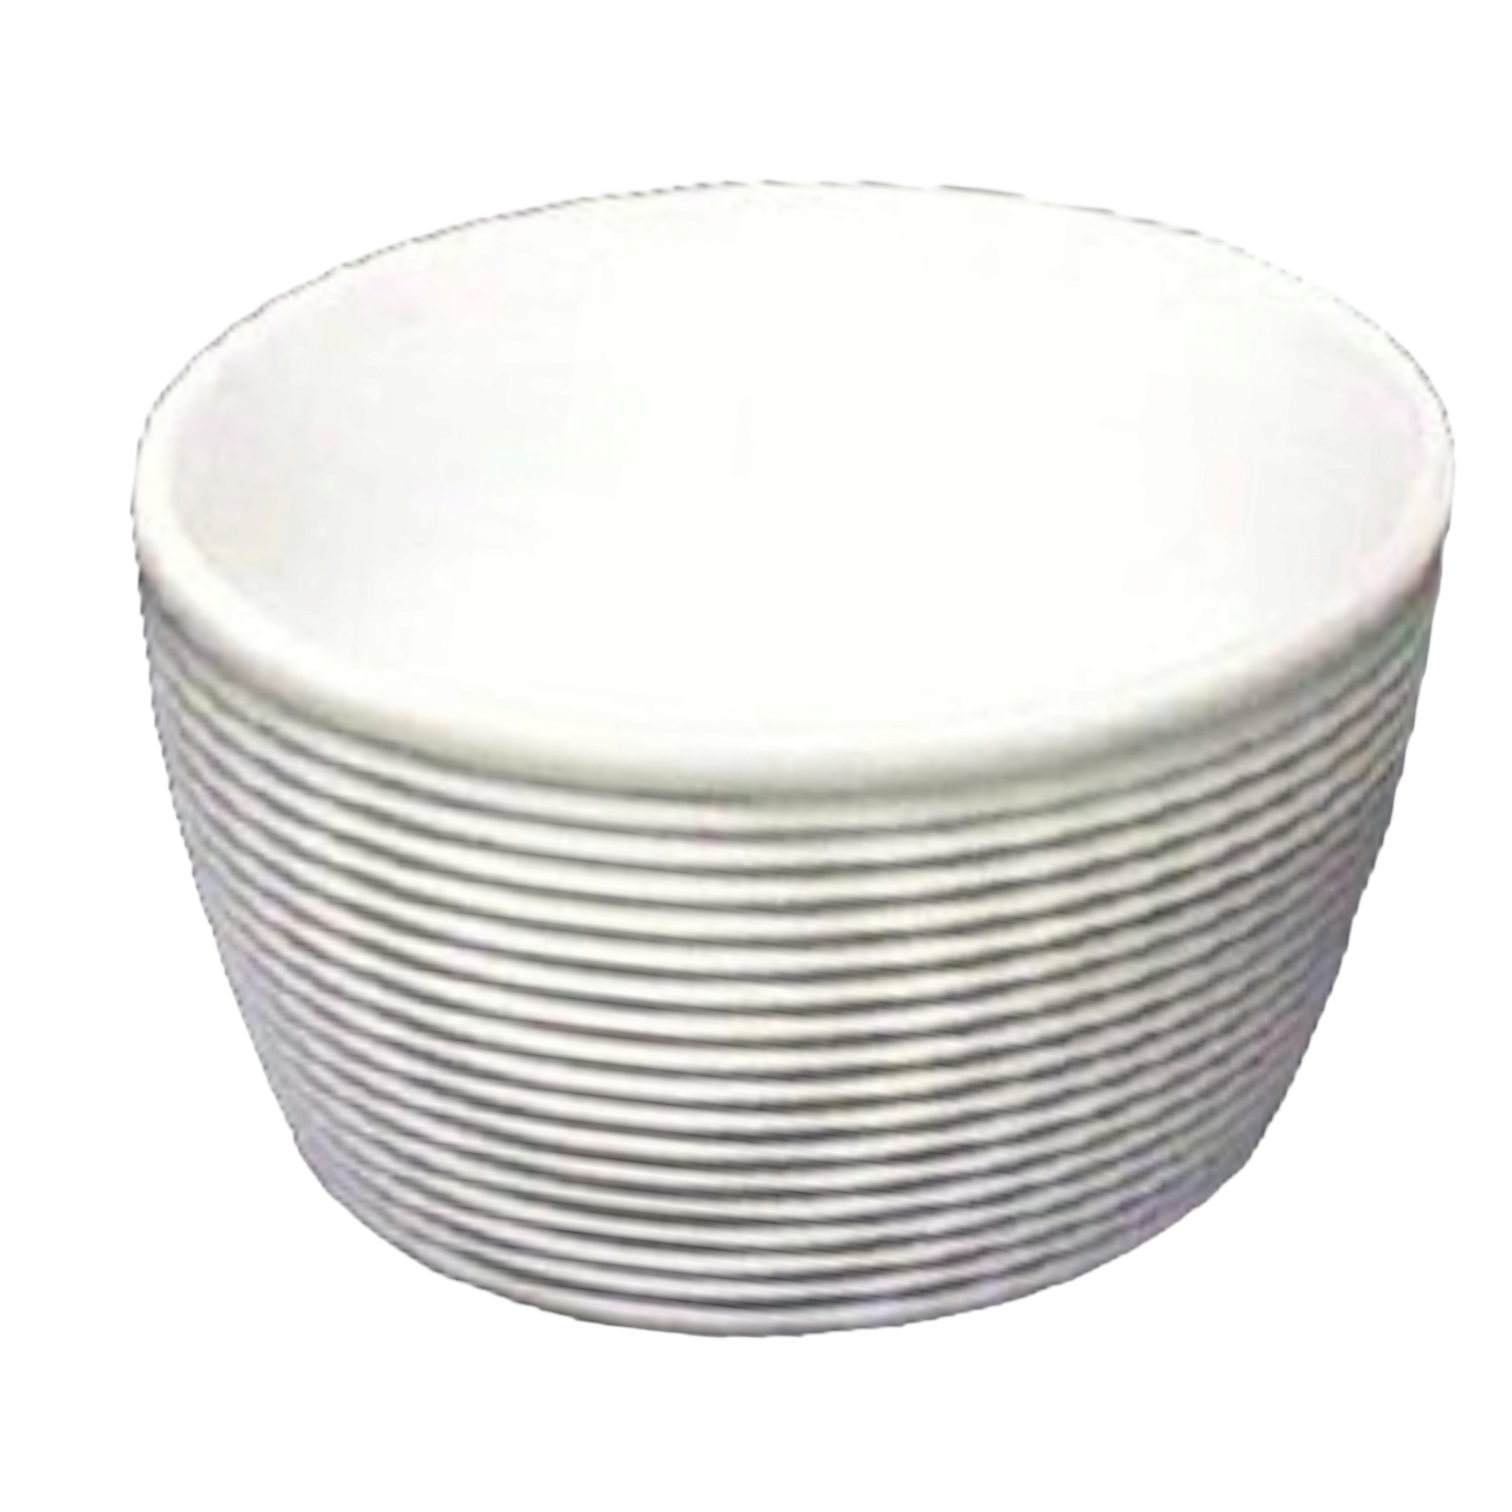 Ceramic White Bowl 7.5Inch